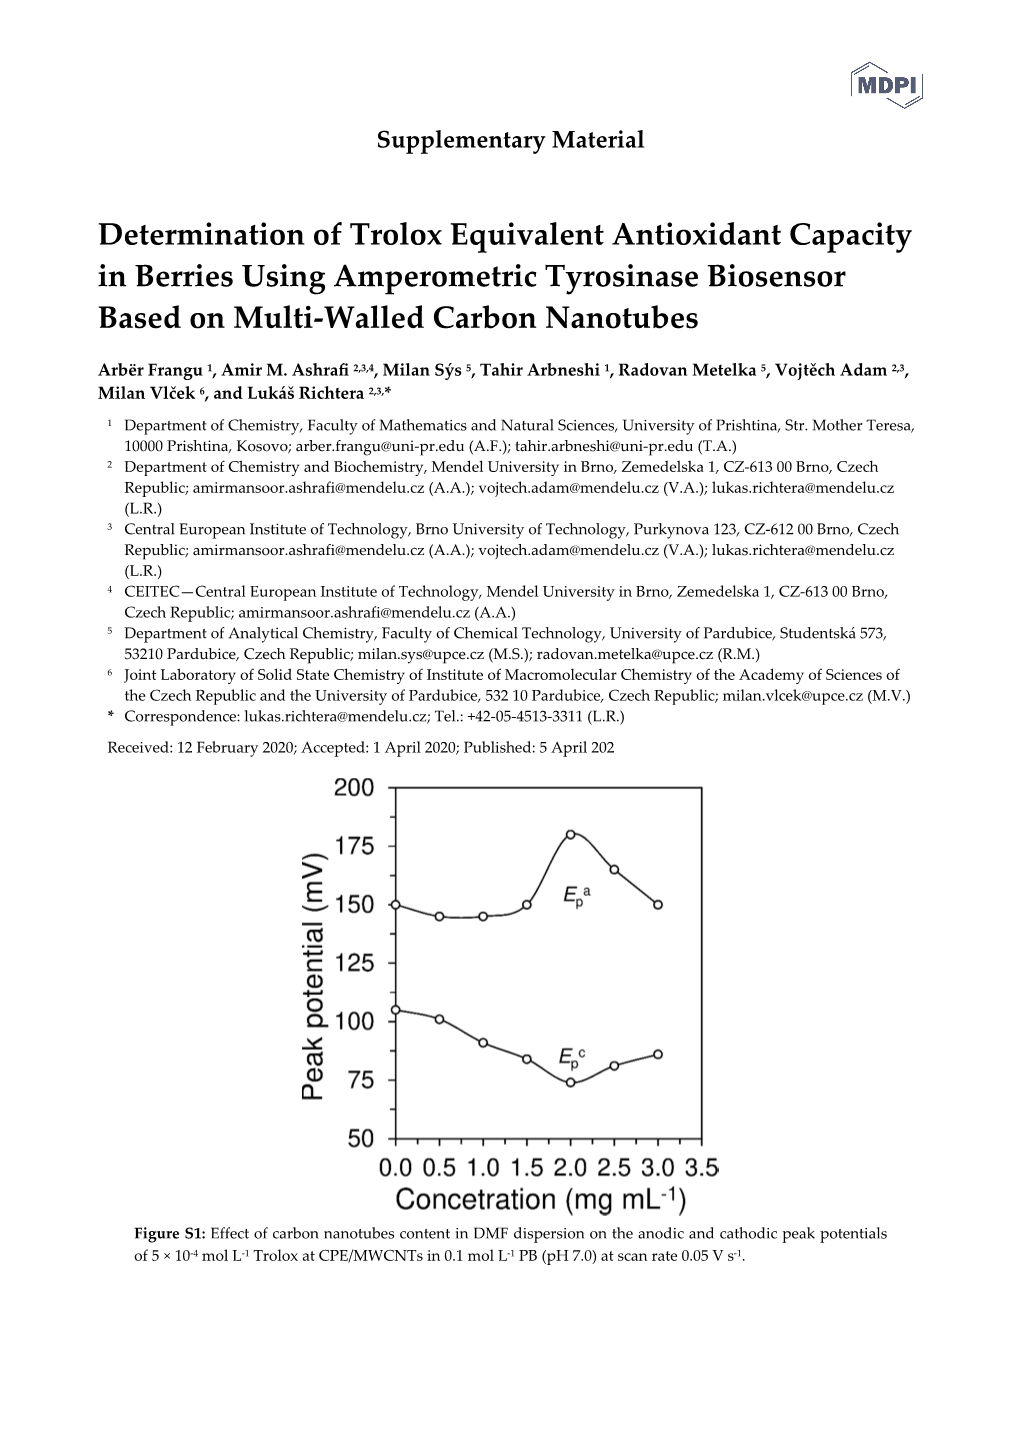 Determination of Trolox Equivalent Antioxidant Capacity in Berries Using Amperometric Tyrosinase Biosensor Based on Multi-Walled Carbon Nanotubes